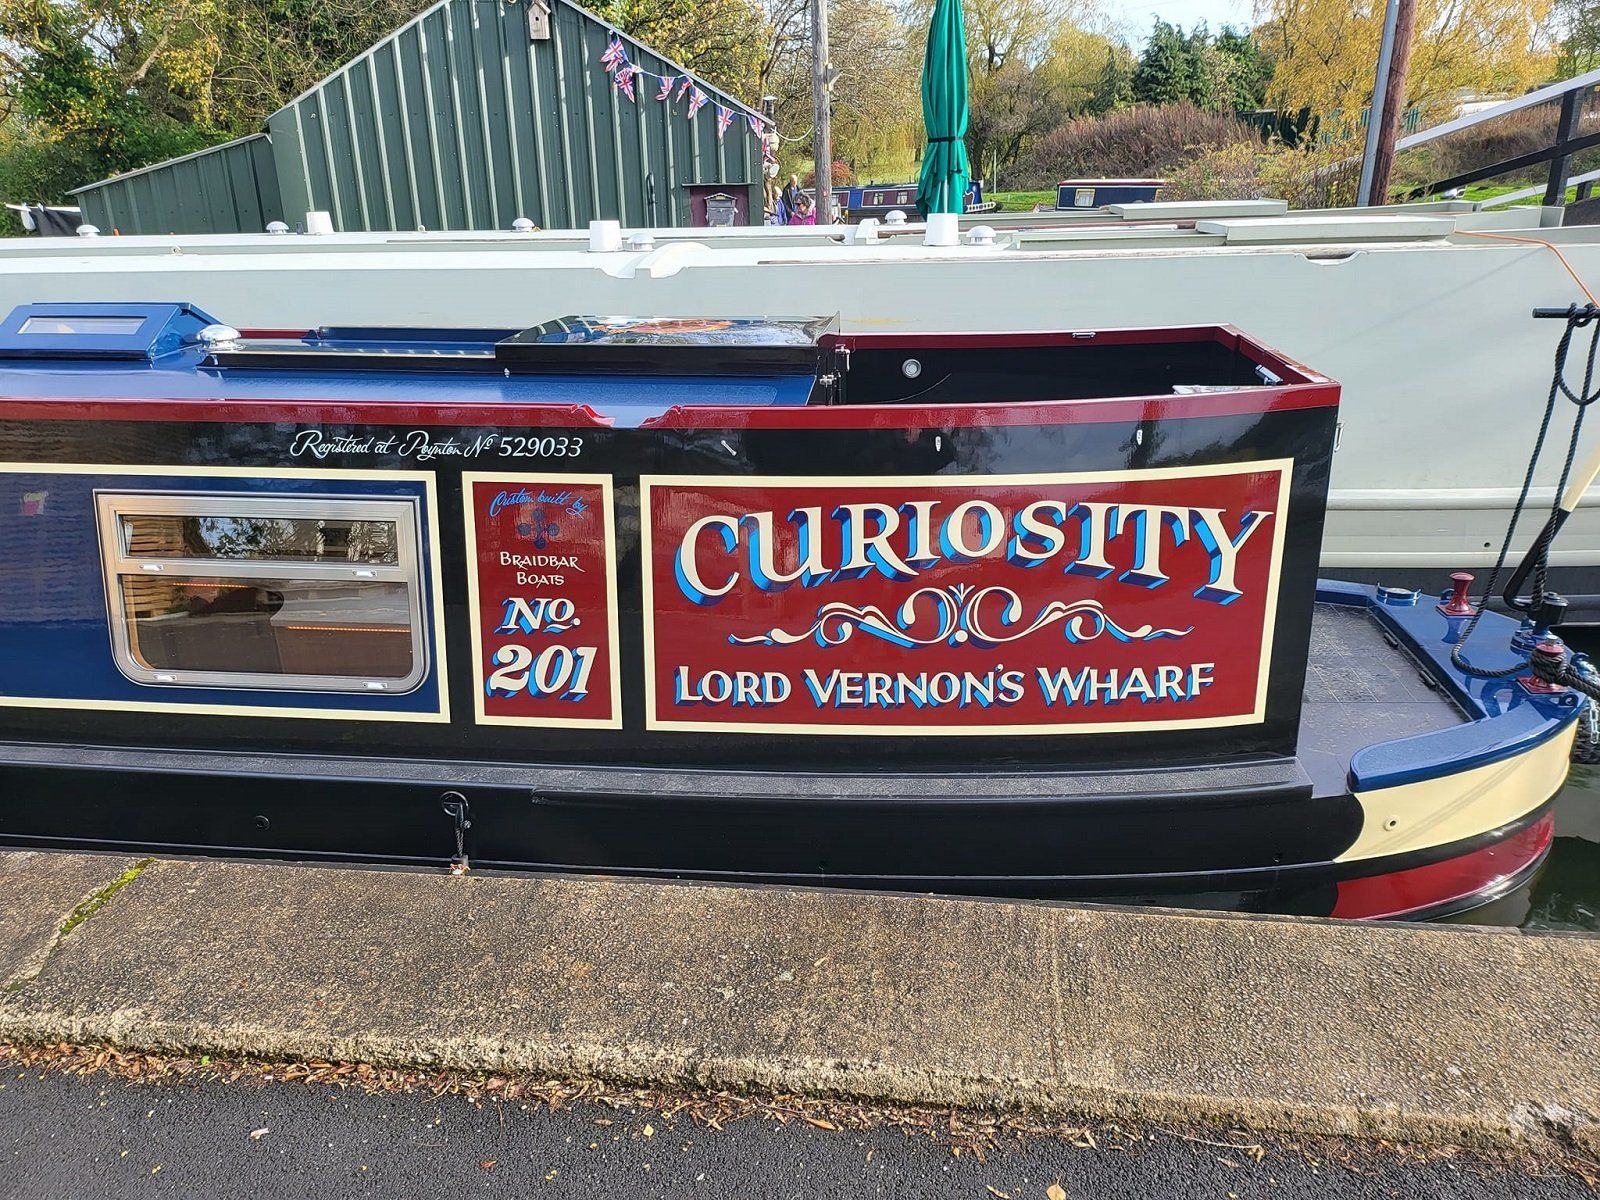 Braidbar Narrowboat Curiosity No. 201